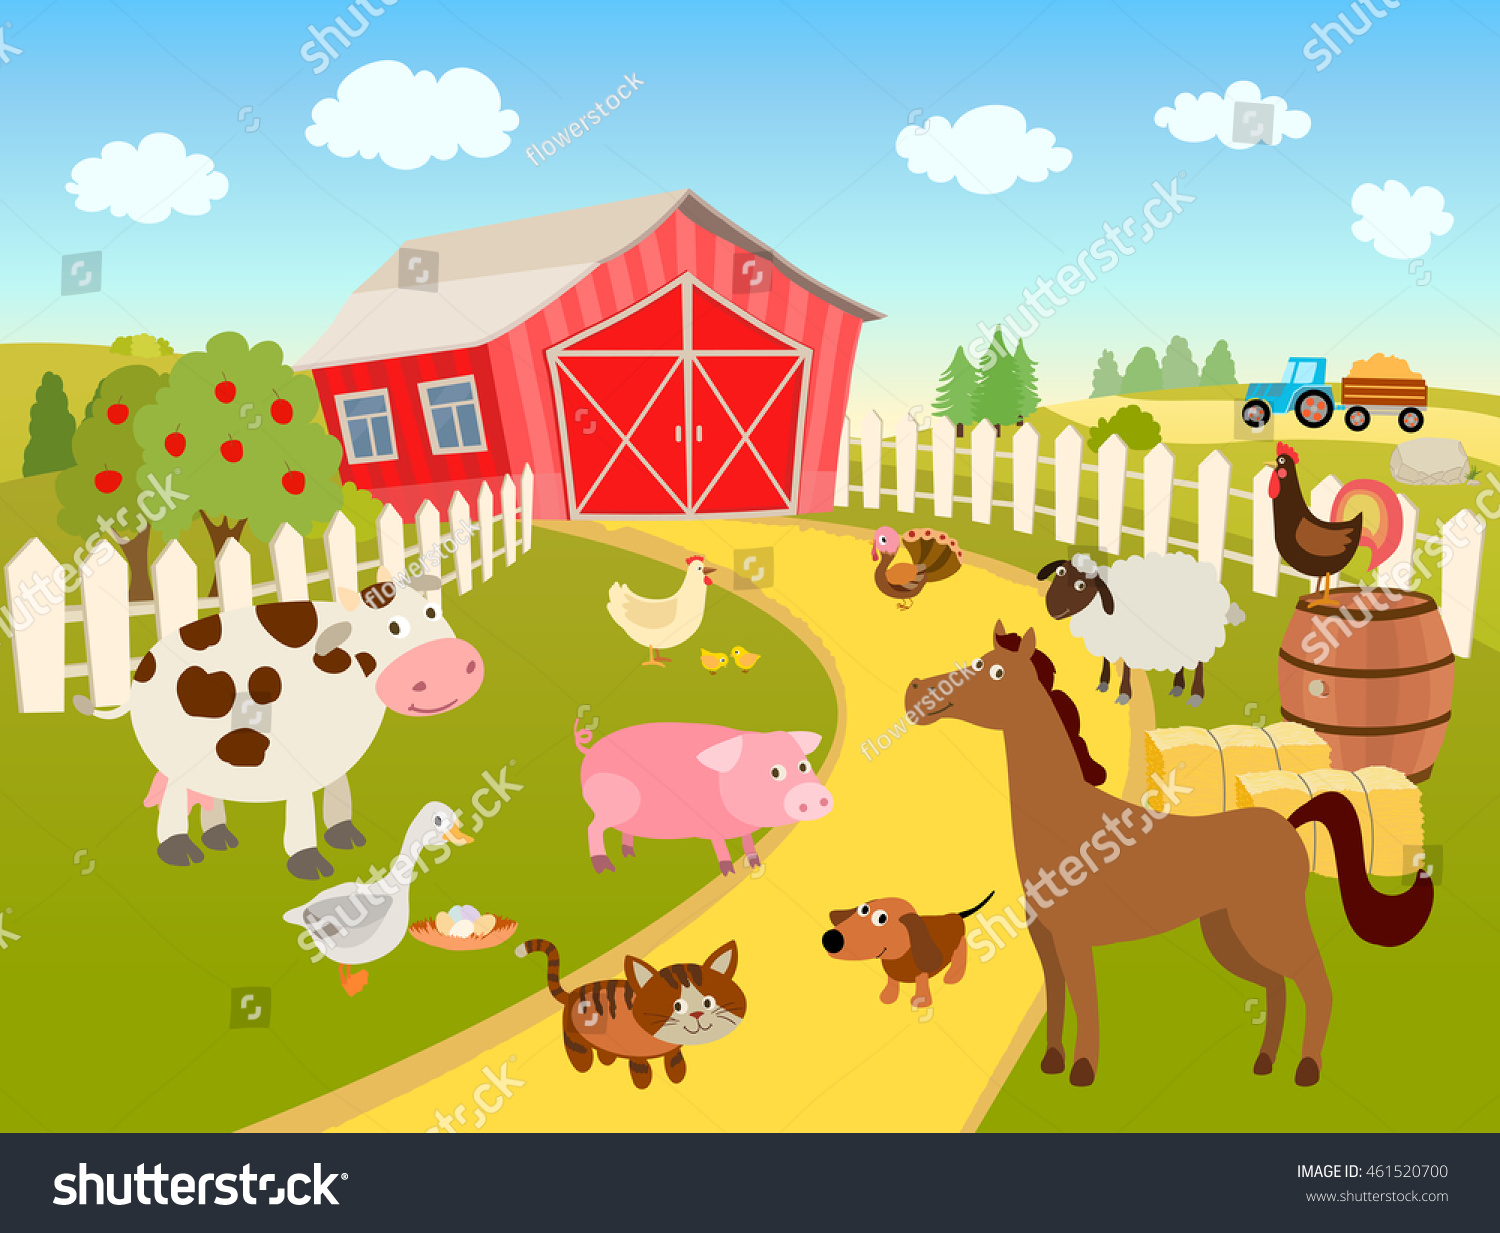 Cartoon Farm Scene Illustration Domestic Pets Stock Vector 461520700 ...